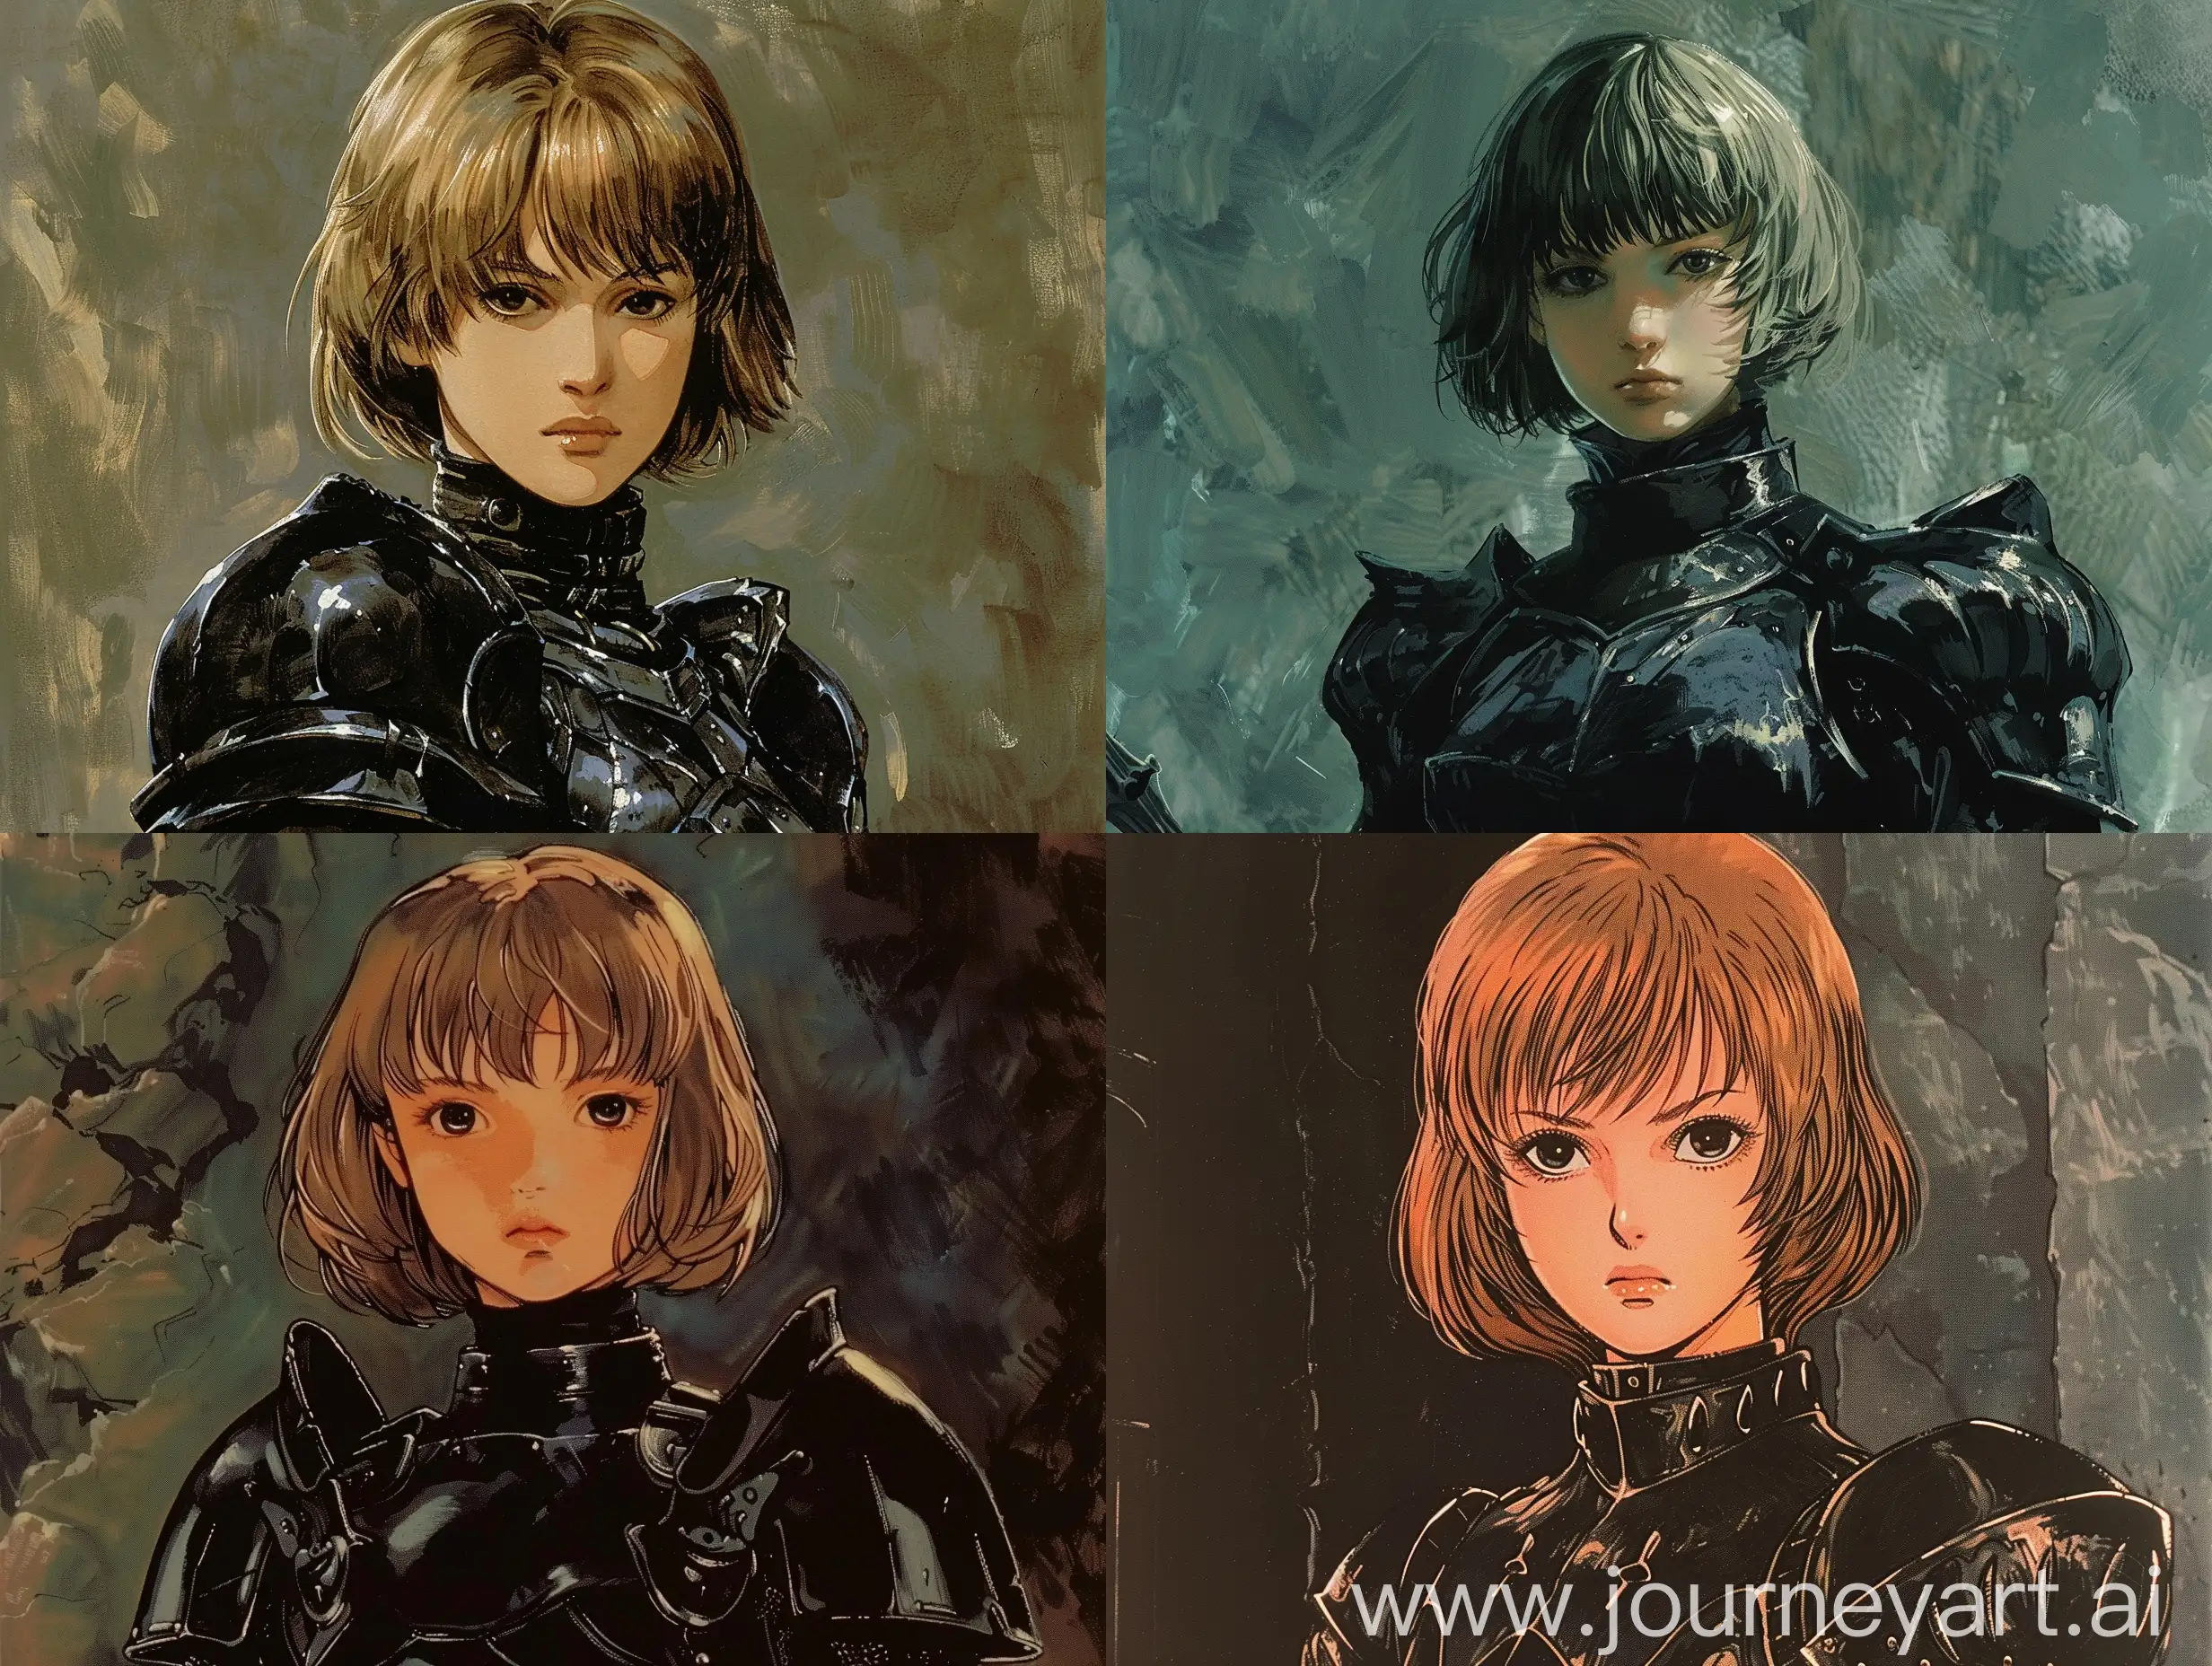 Fantasy-Illustration-of-a-Blonde-Girl-in-Black-Leather-Armor